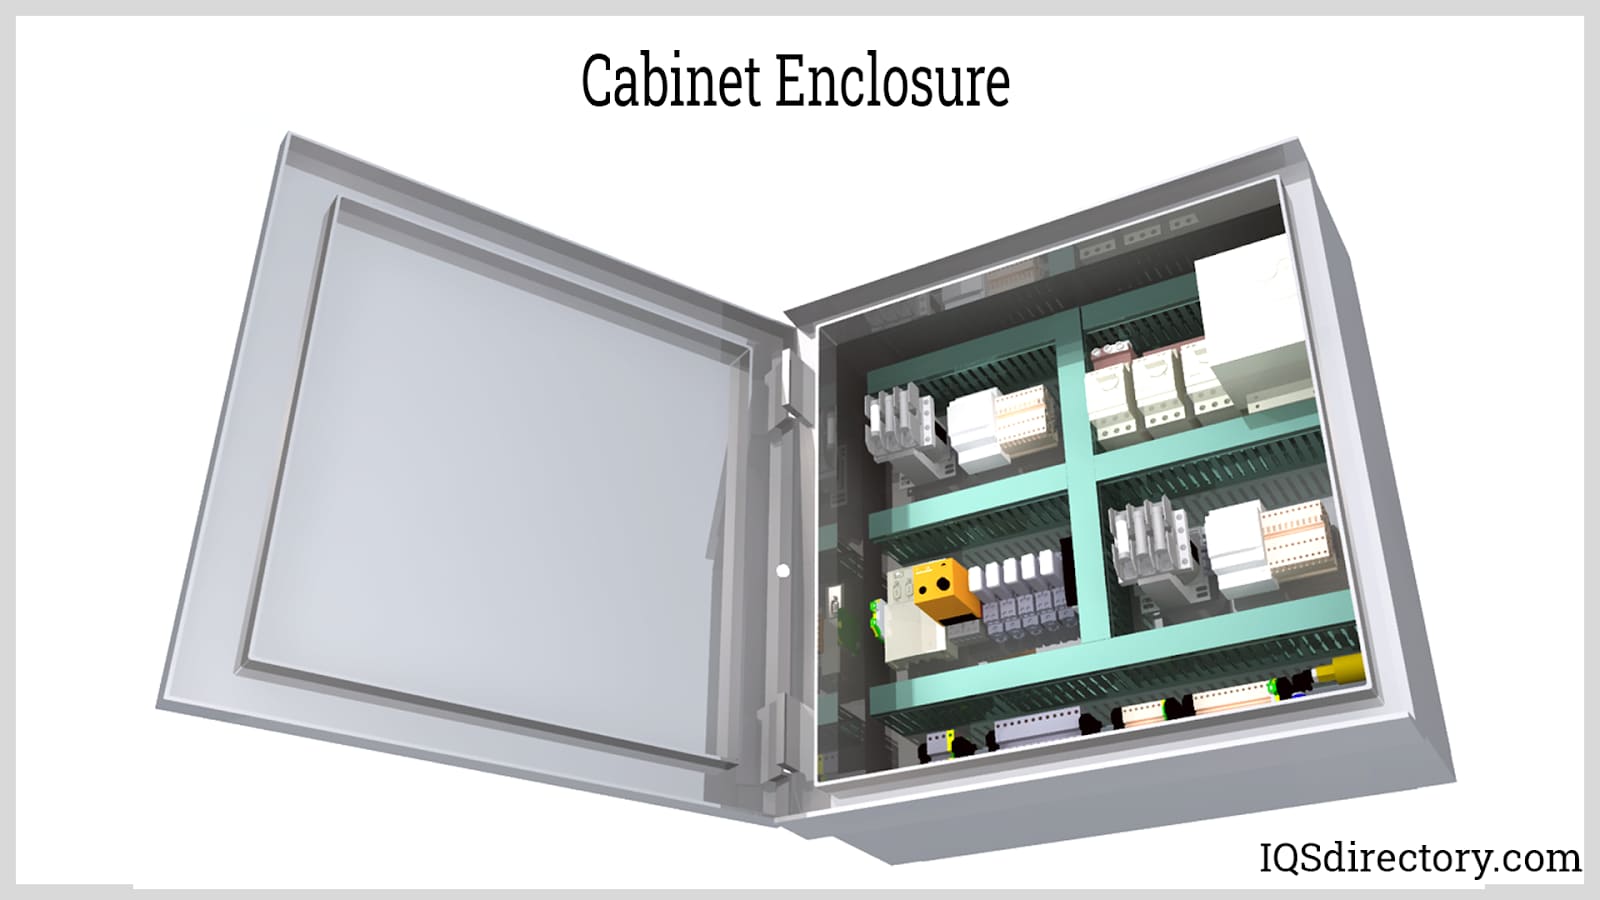 Cabinet Enclosure